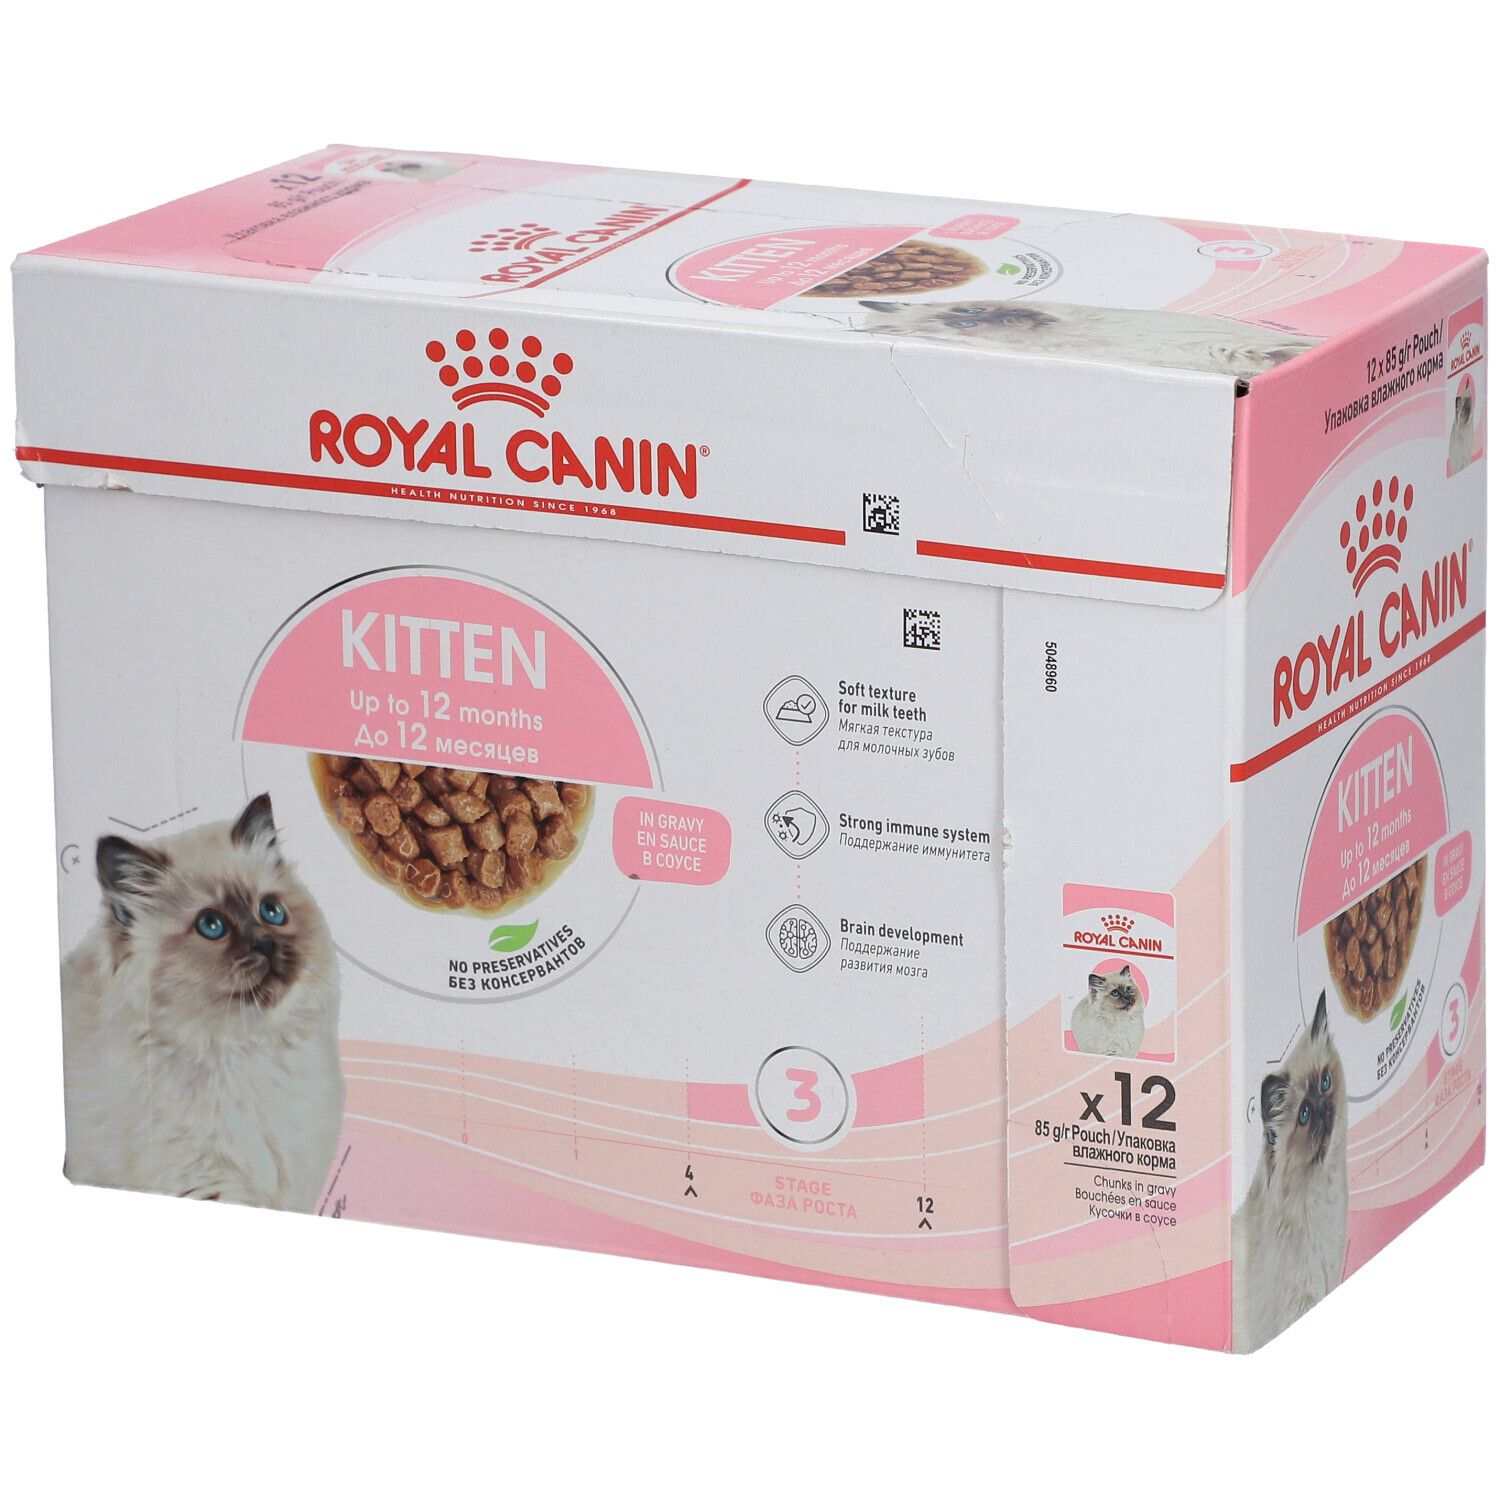 ROYAL CANIN® Kitten Sauce - Sachet fraîcheur pour chaton 1020 g pâte